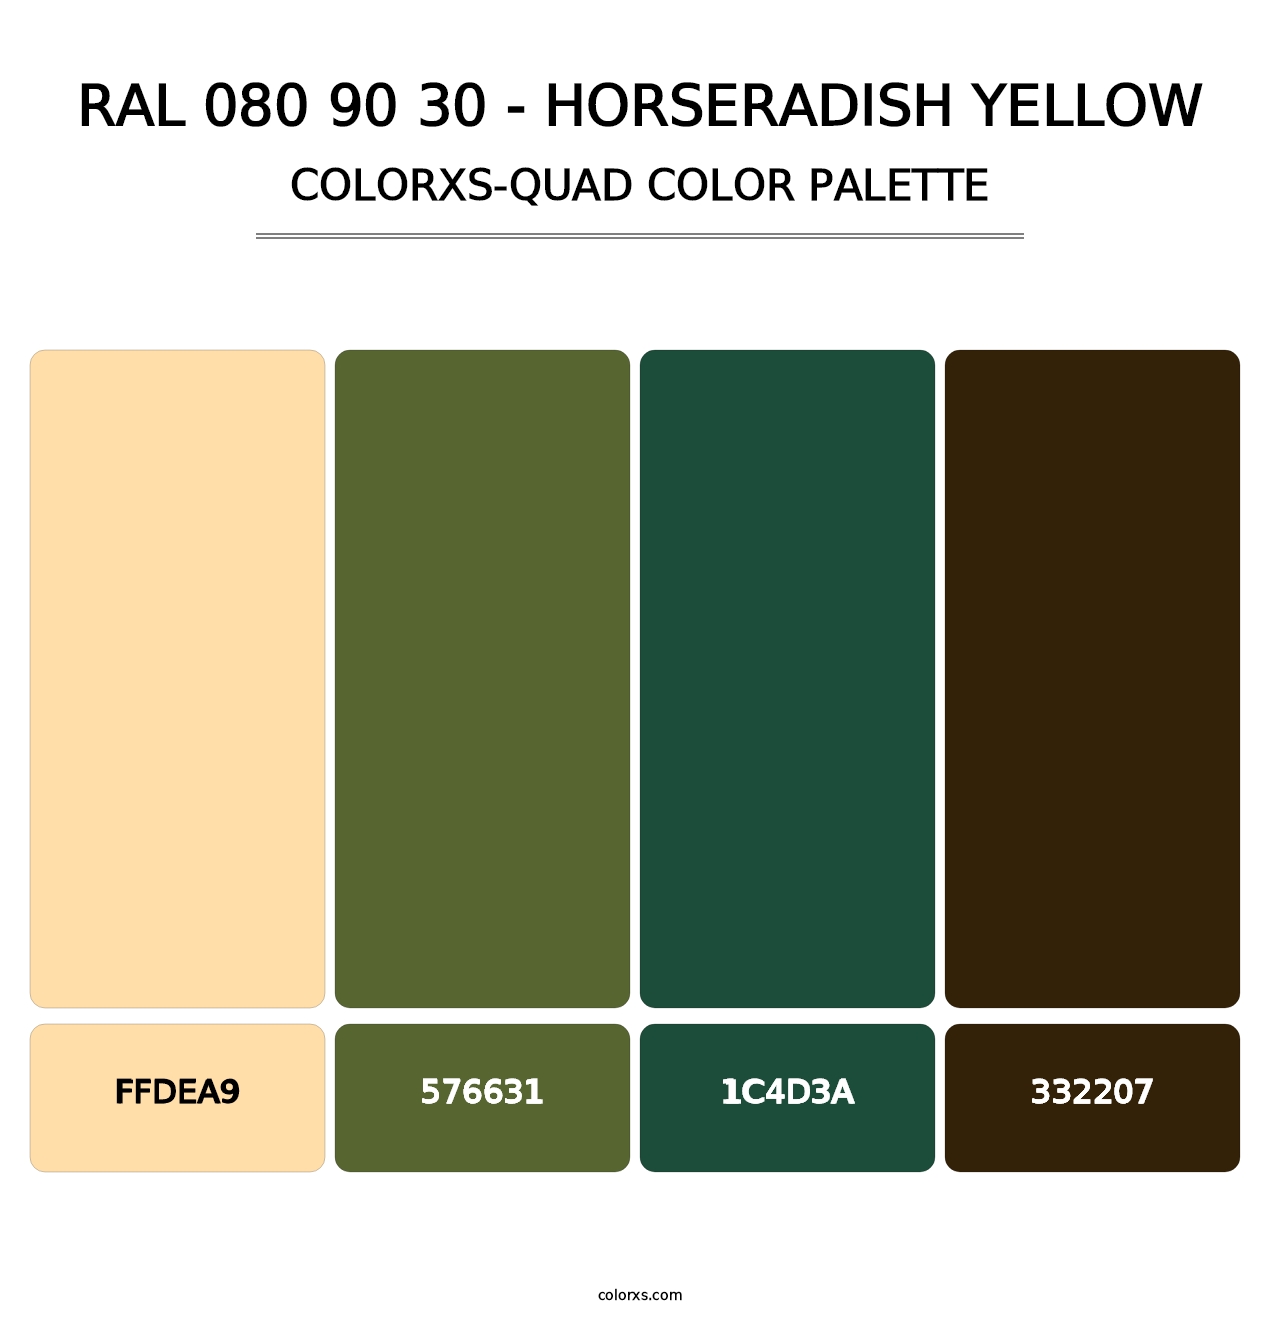 RAL 080 90 30 - Horseradish Yellow - Colorxs Quad Palette